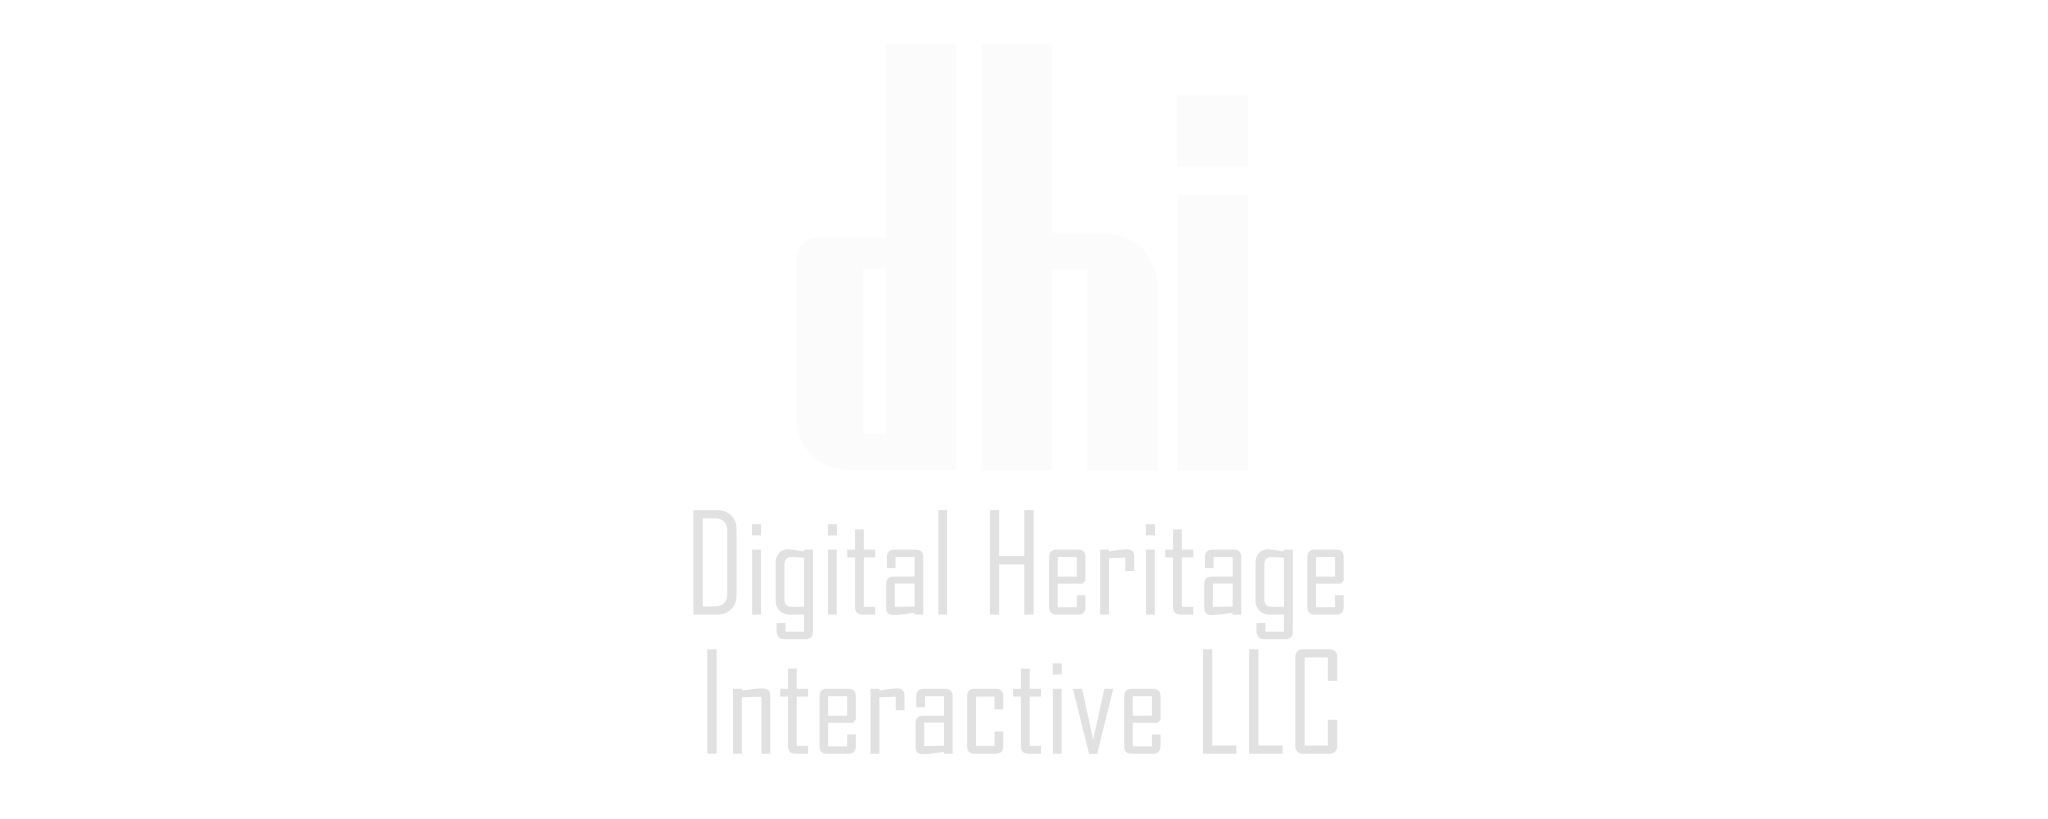 Digital Heritage Interactive, LLC